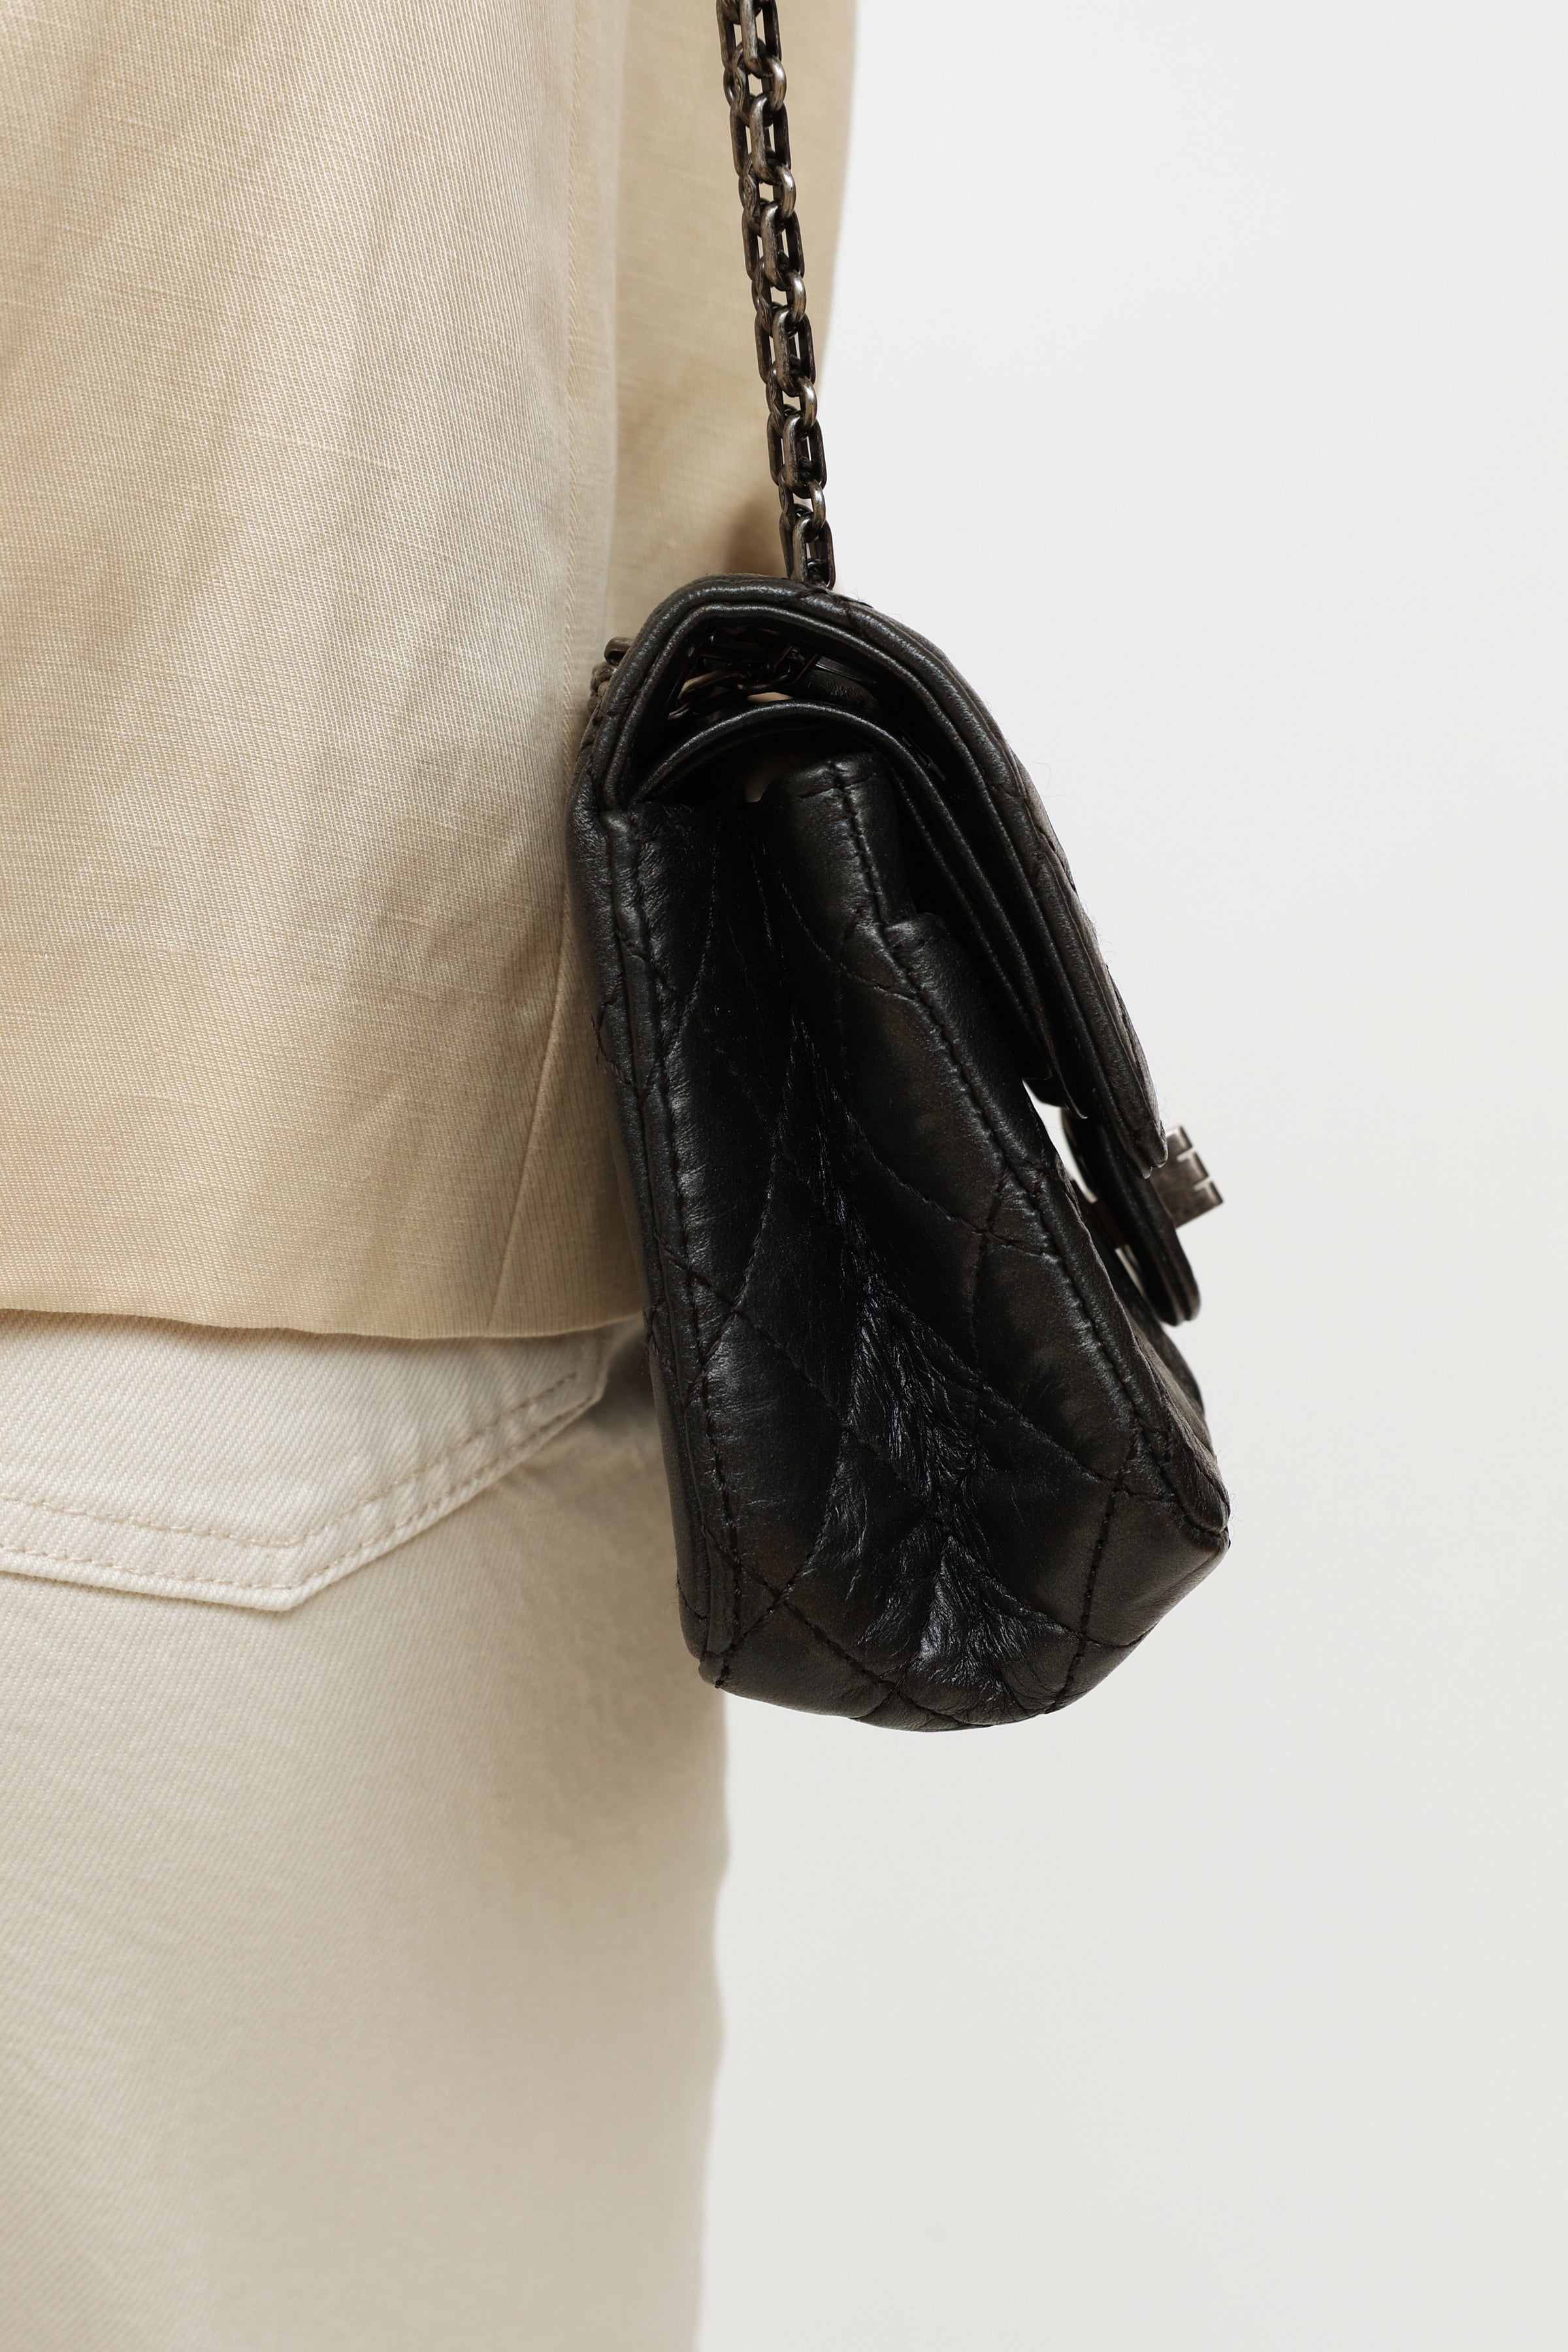 Chanel // Black Loose Ribbed Knit Tights – VSP Consignment